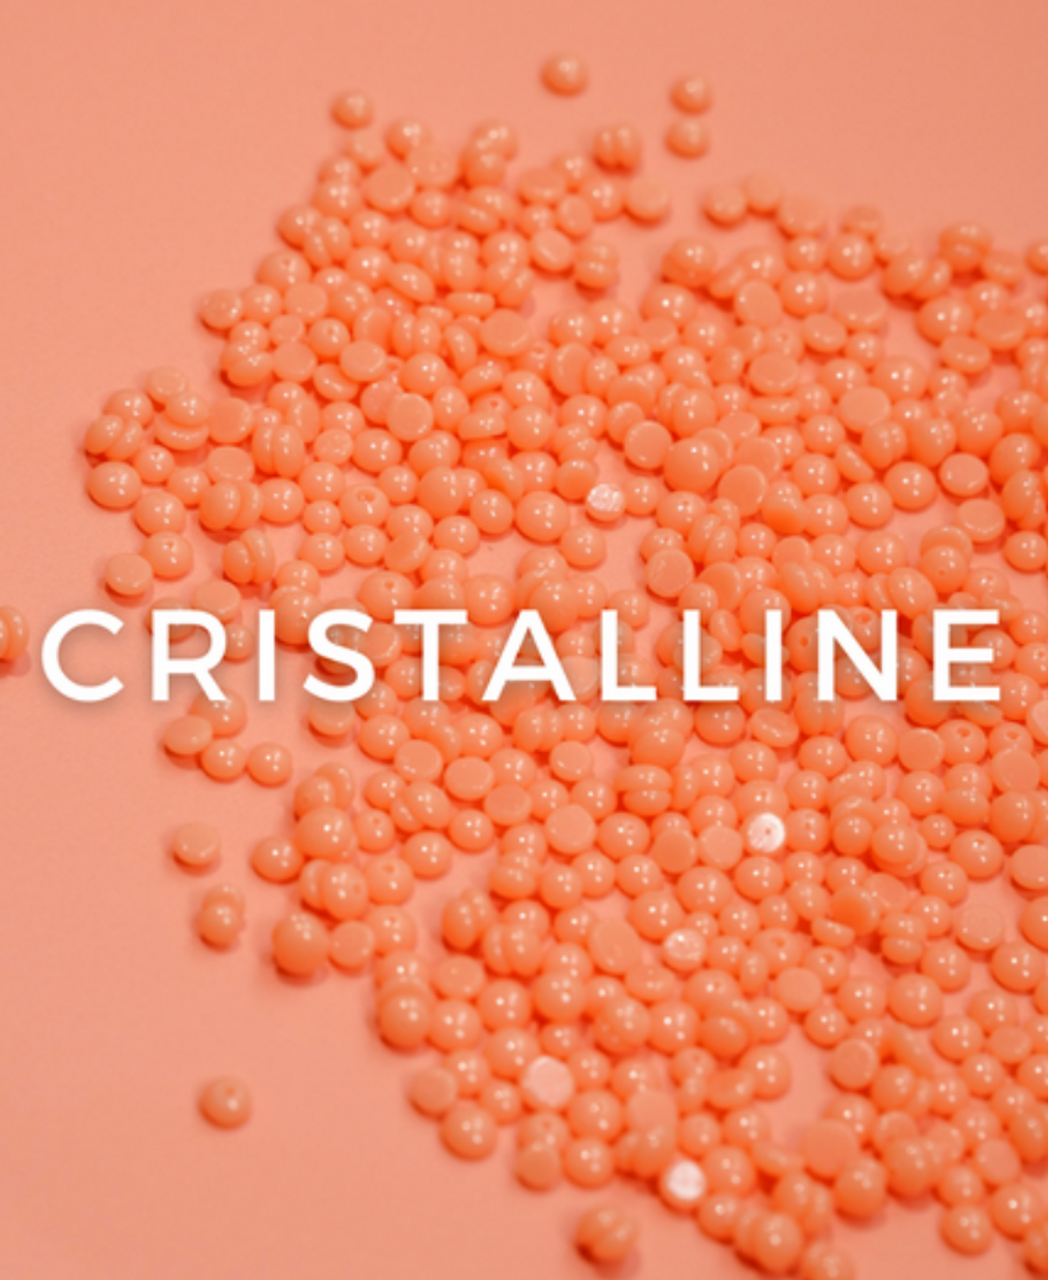 Cirepil 3750g Bulk Cristalline Hypoallergenic Wax Beads - Case of 4 